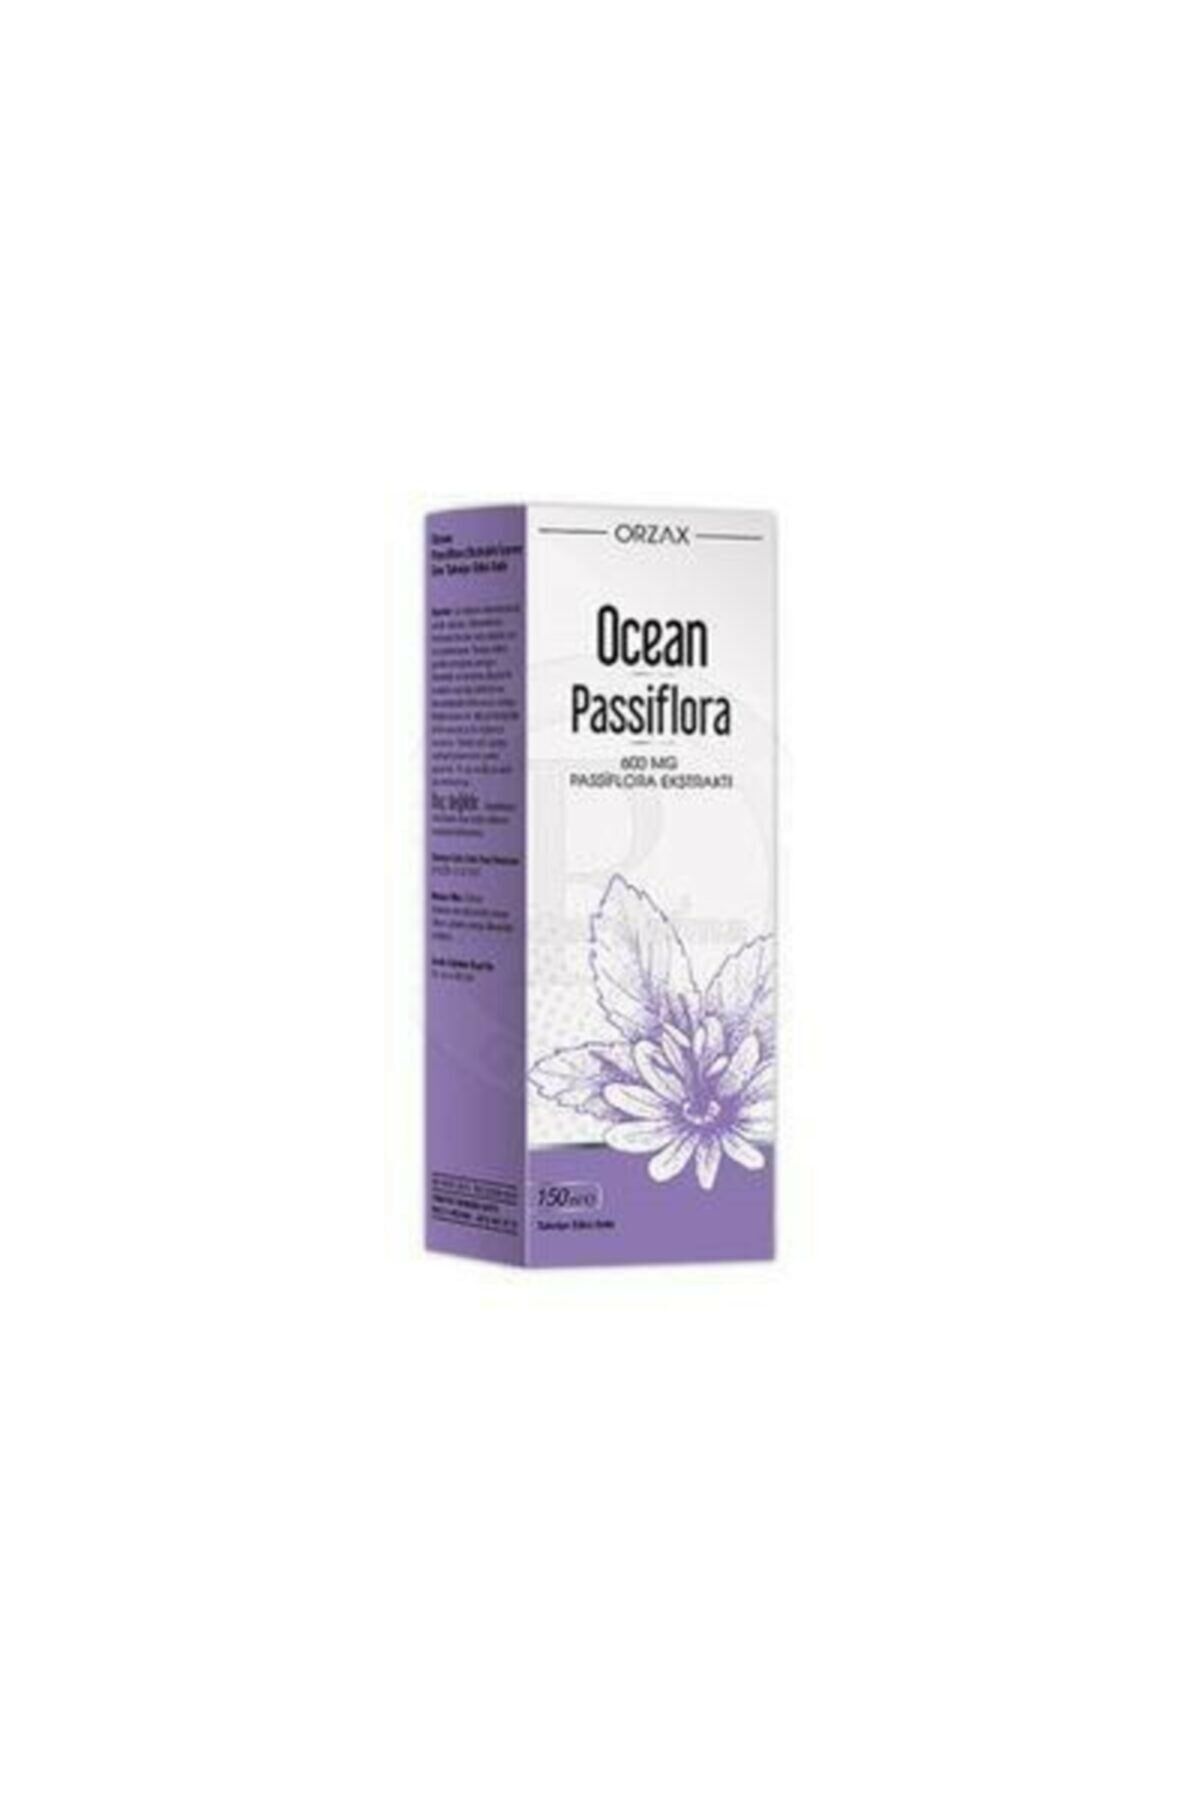 Orzax Ocean Passiflora 600 mg Passifflora Extract 150 ml